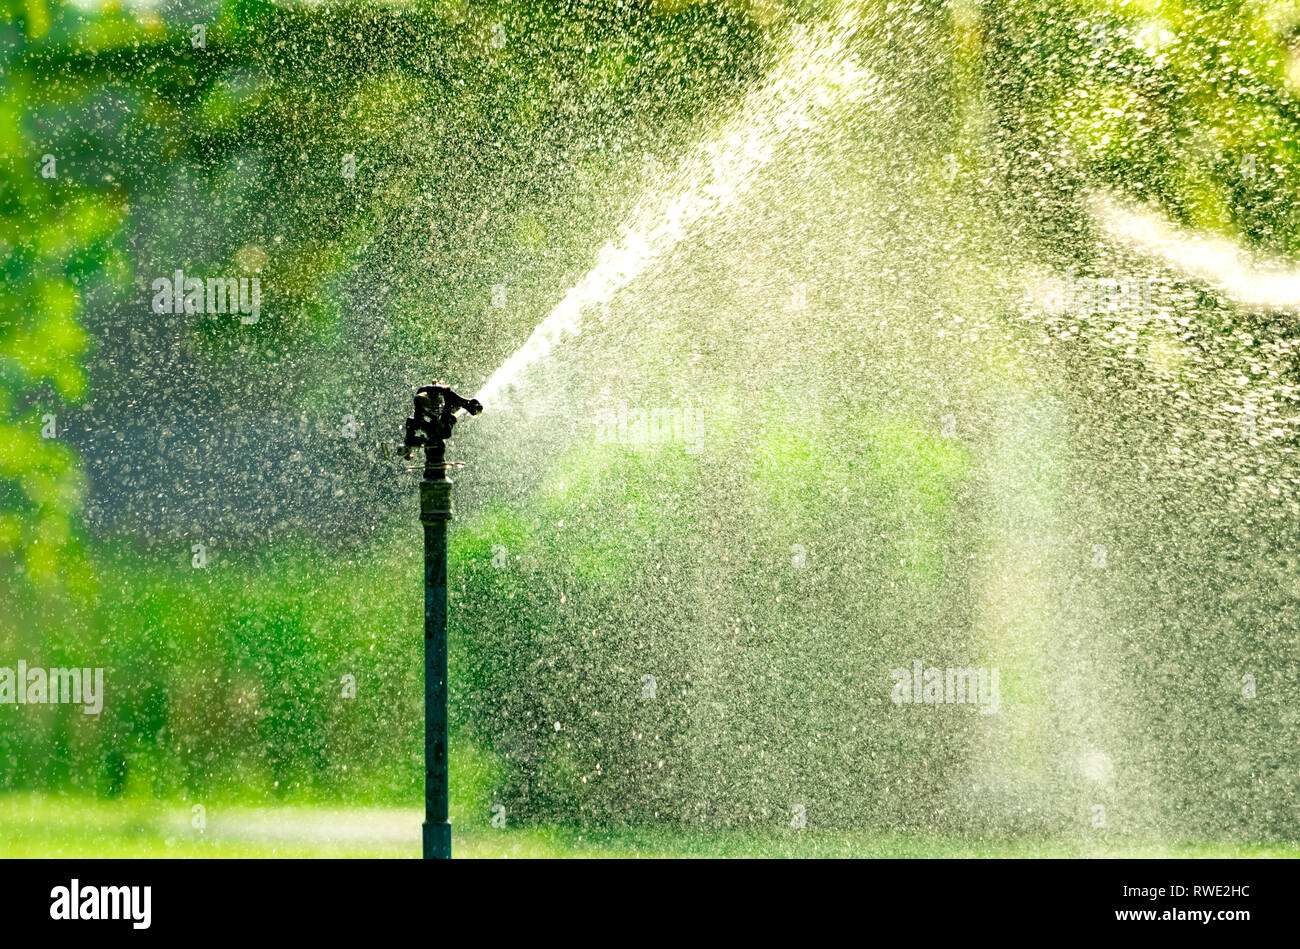 Lawn Sprinkler System Installation Companies